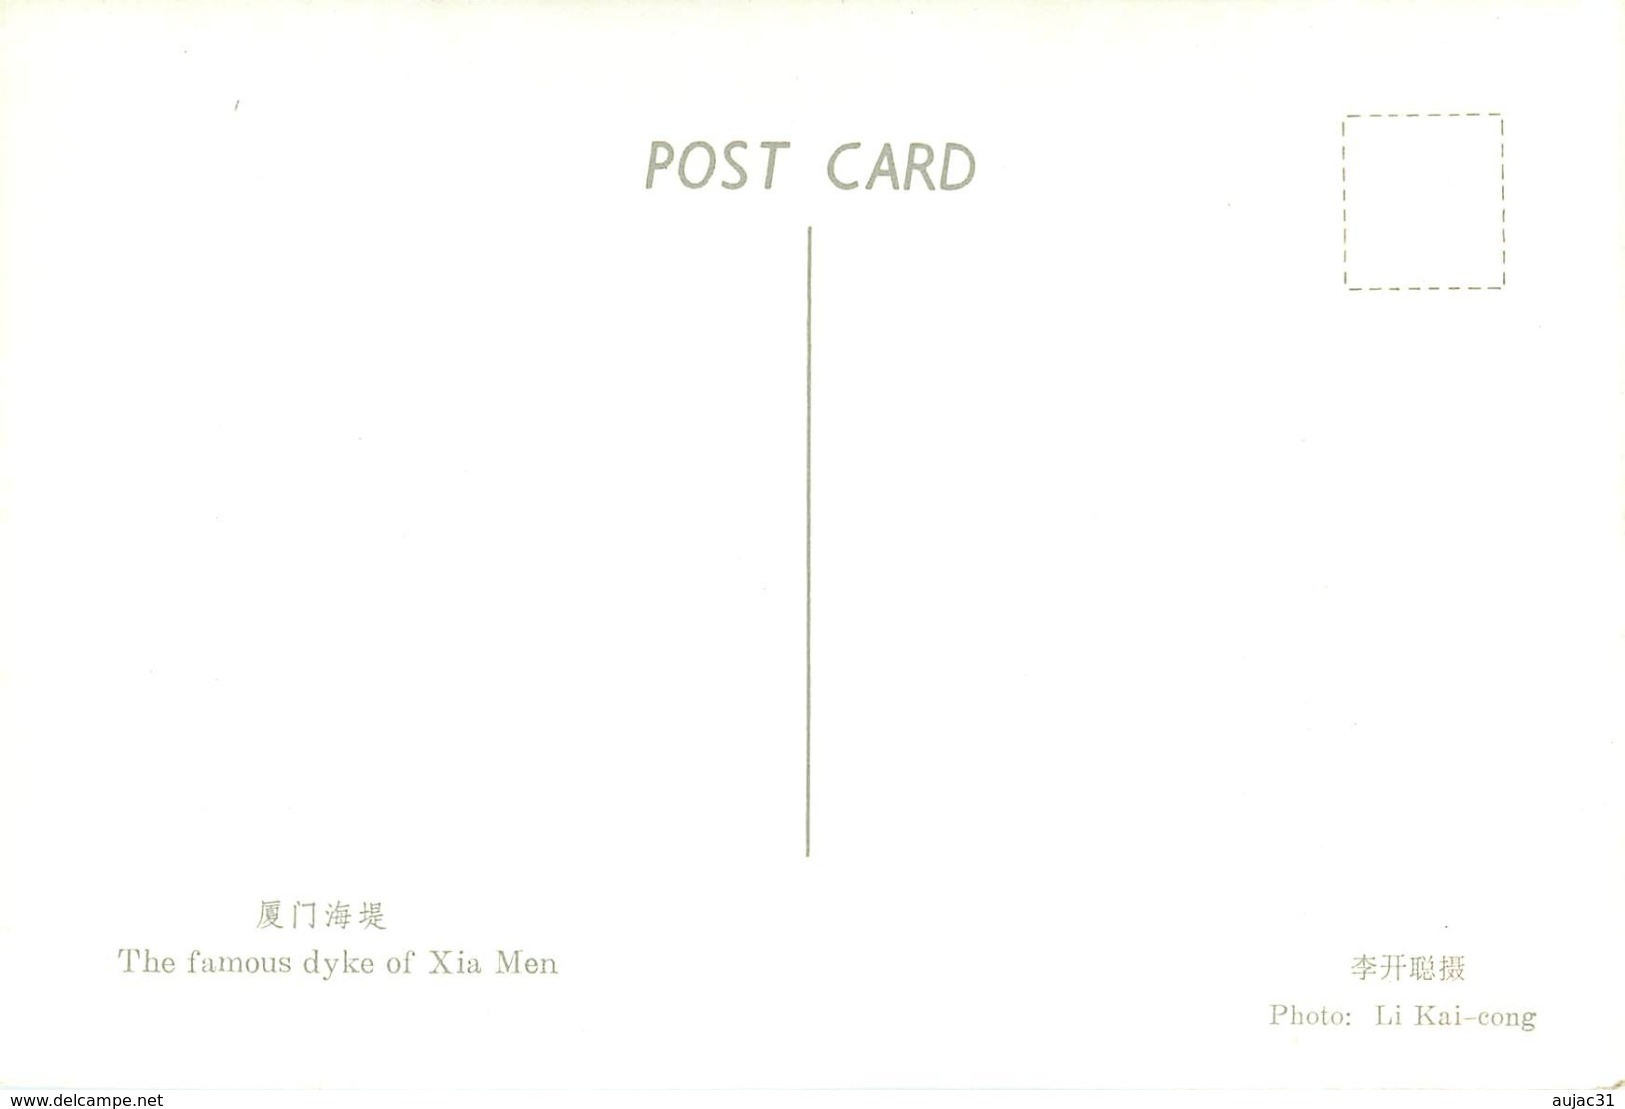 Chine - China - A short guide to Xia Men - Amoy - 11 cartes avec pochette - Semi moderne grand format - bon état général